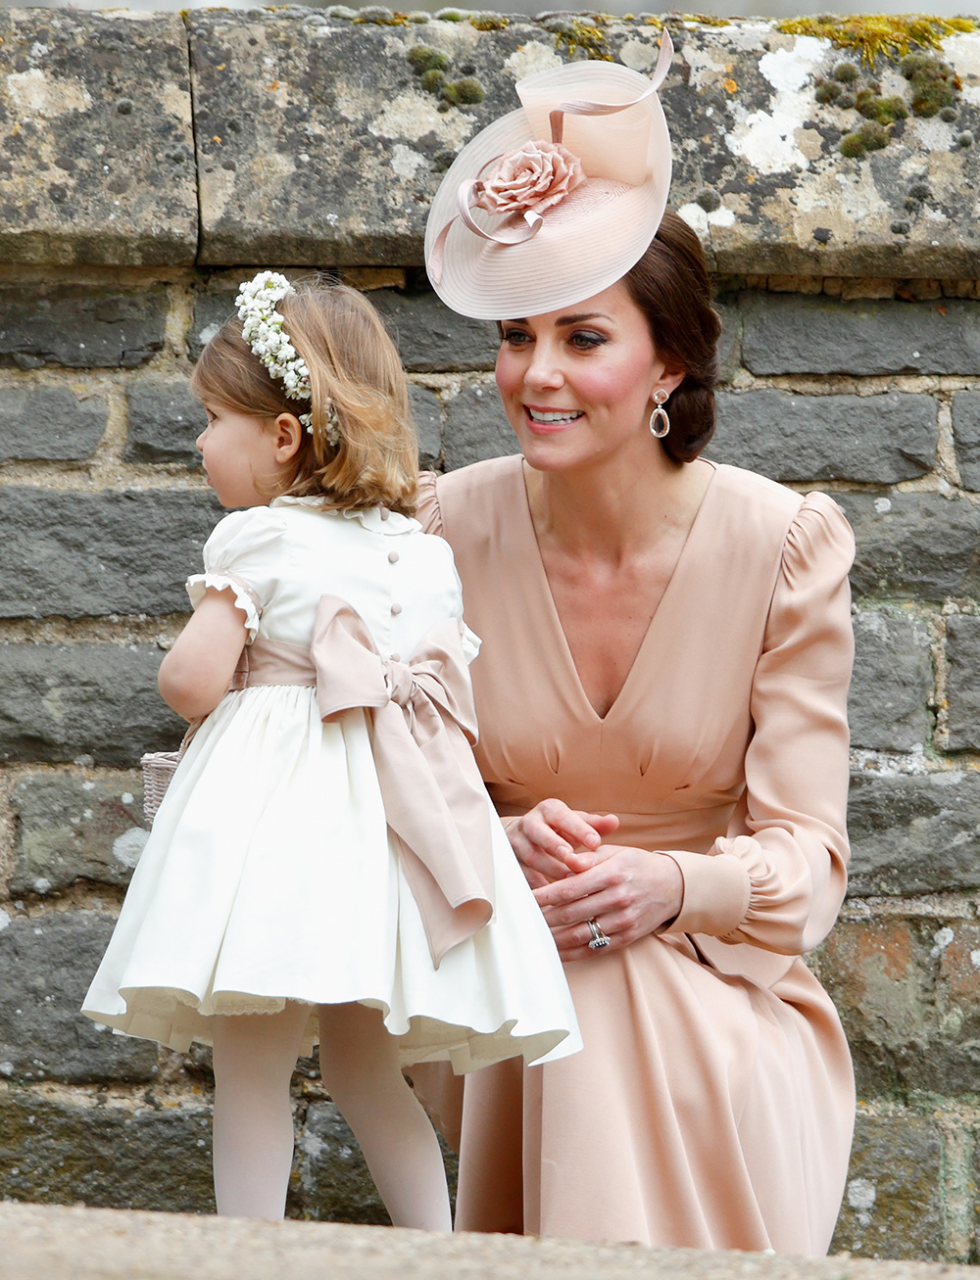 <p>前陣子，英國王妃Kate Middleton出席妹妹Pippa Middleton的婚禮，穿上Alexander McQueen玫瑰金色禮服現身，頭上搭配一頂設計流線形的「禮帽」，整體造型高貴優雅，又不會搶去妹妹的風頭。</p>